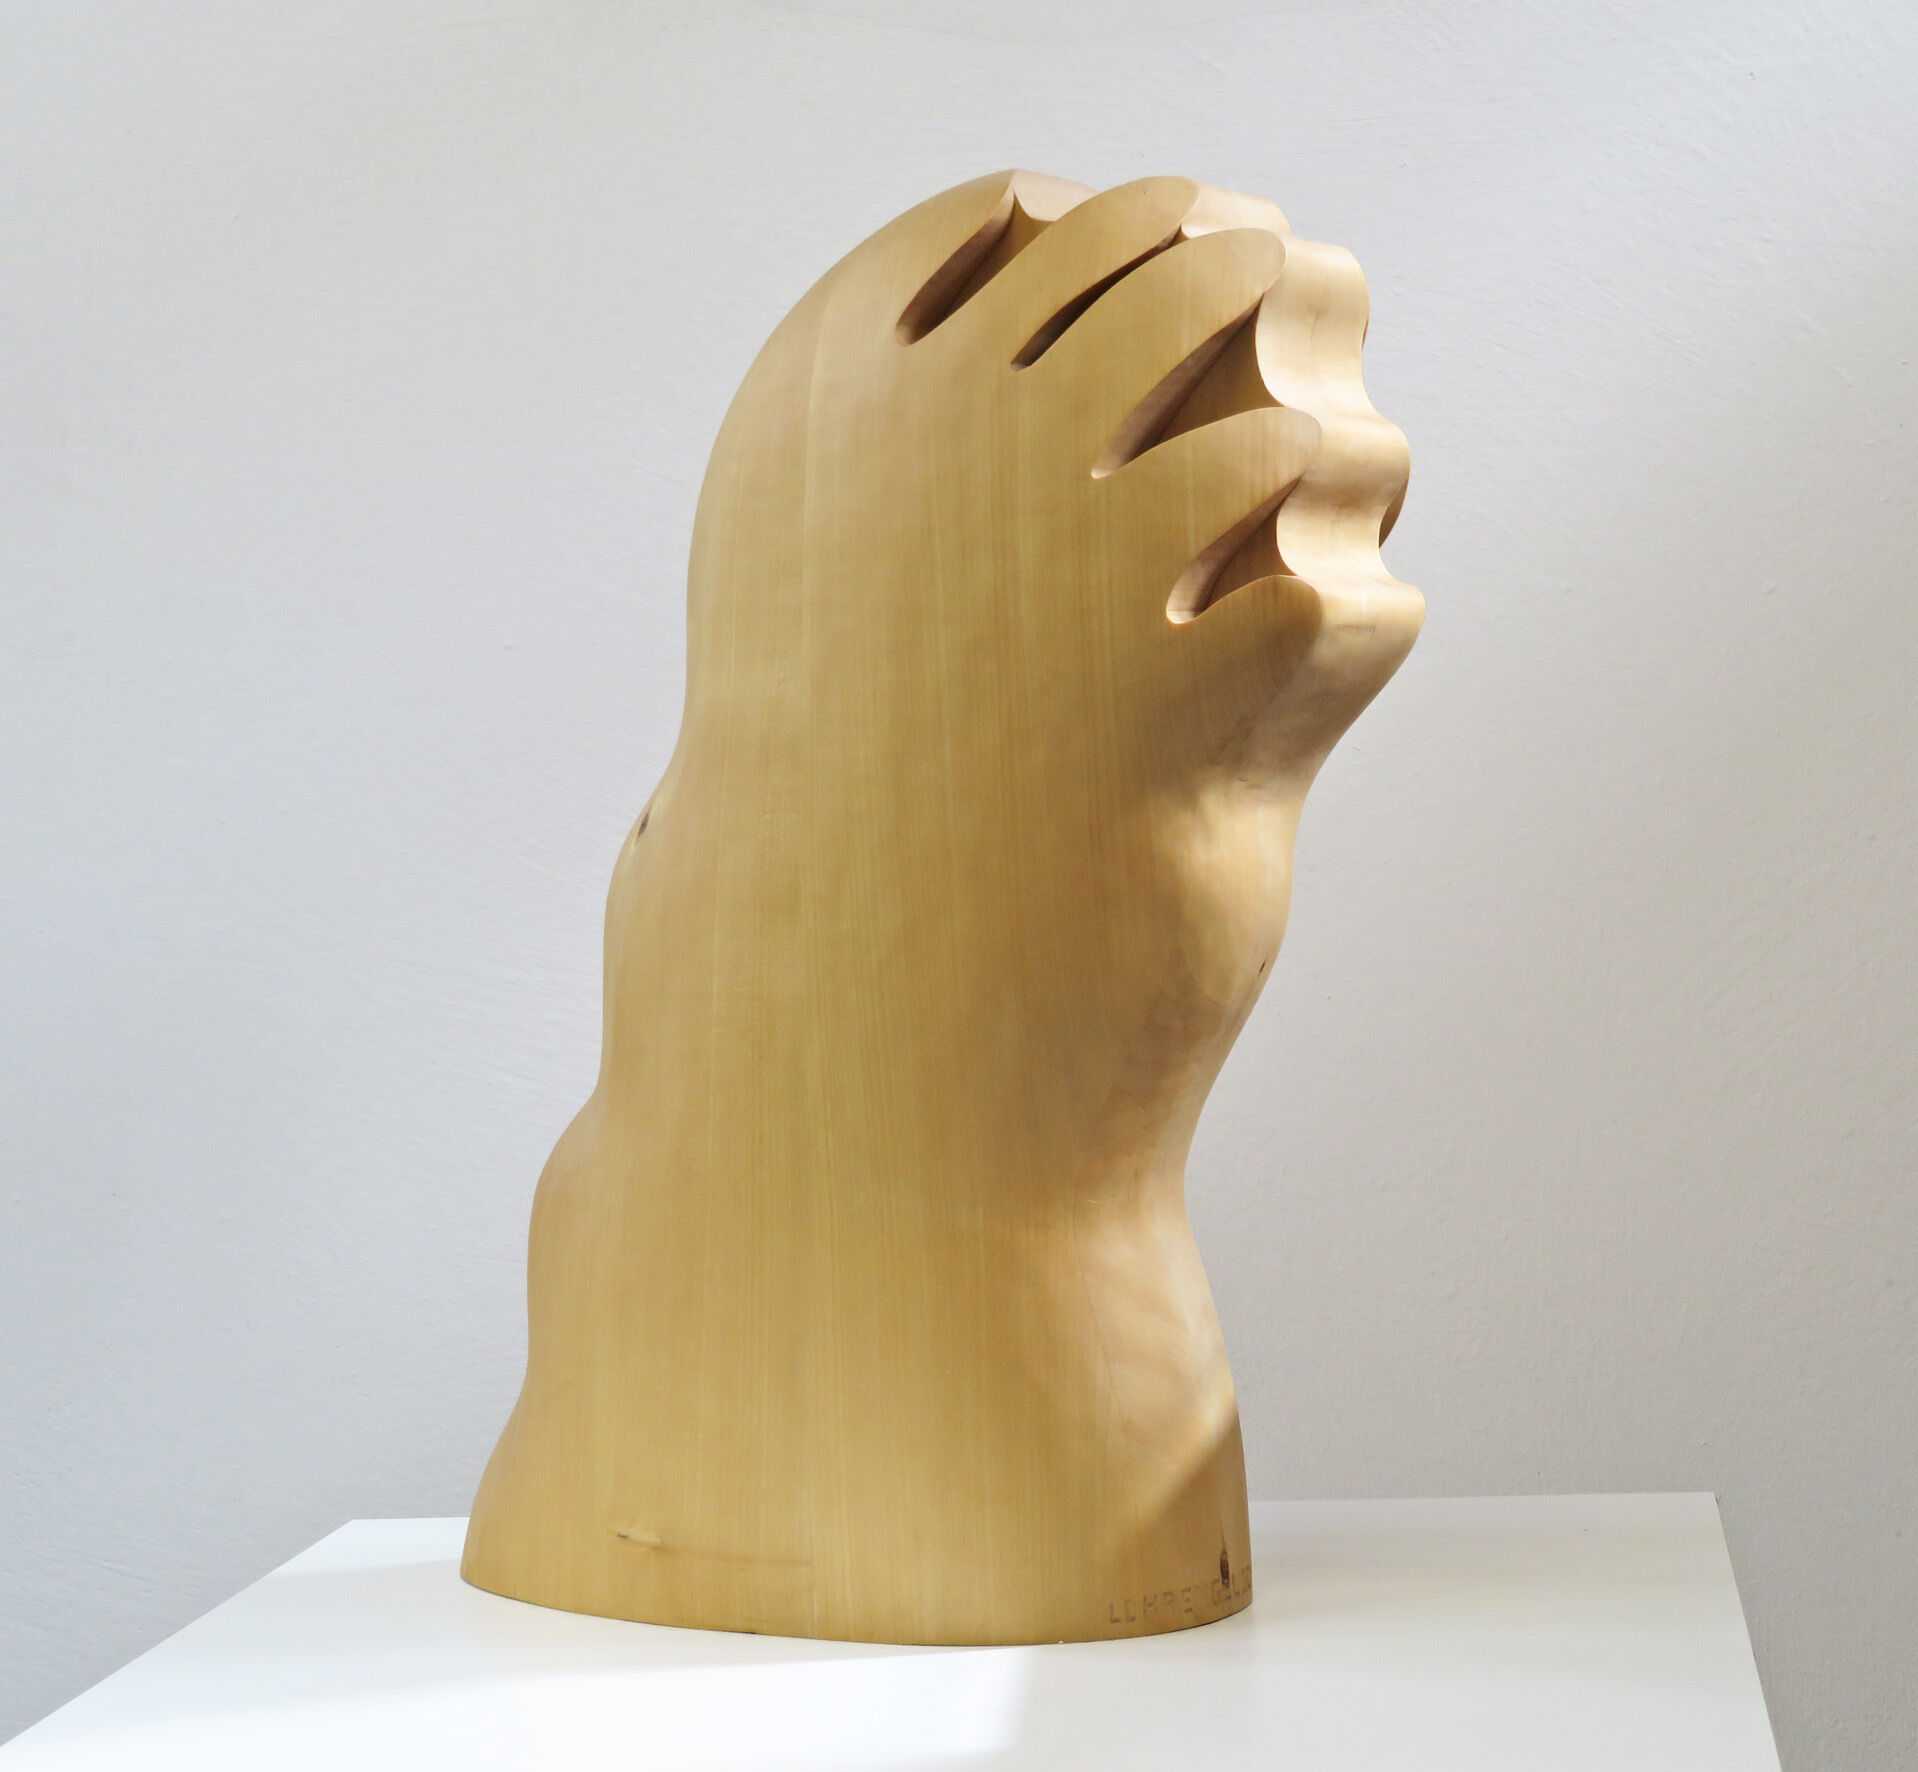 Sculpture "Small head hand" (2000)